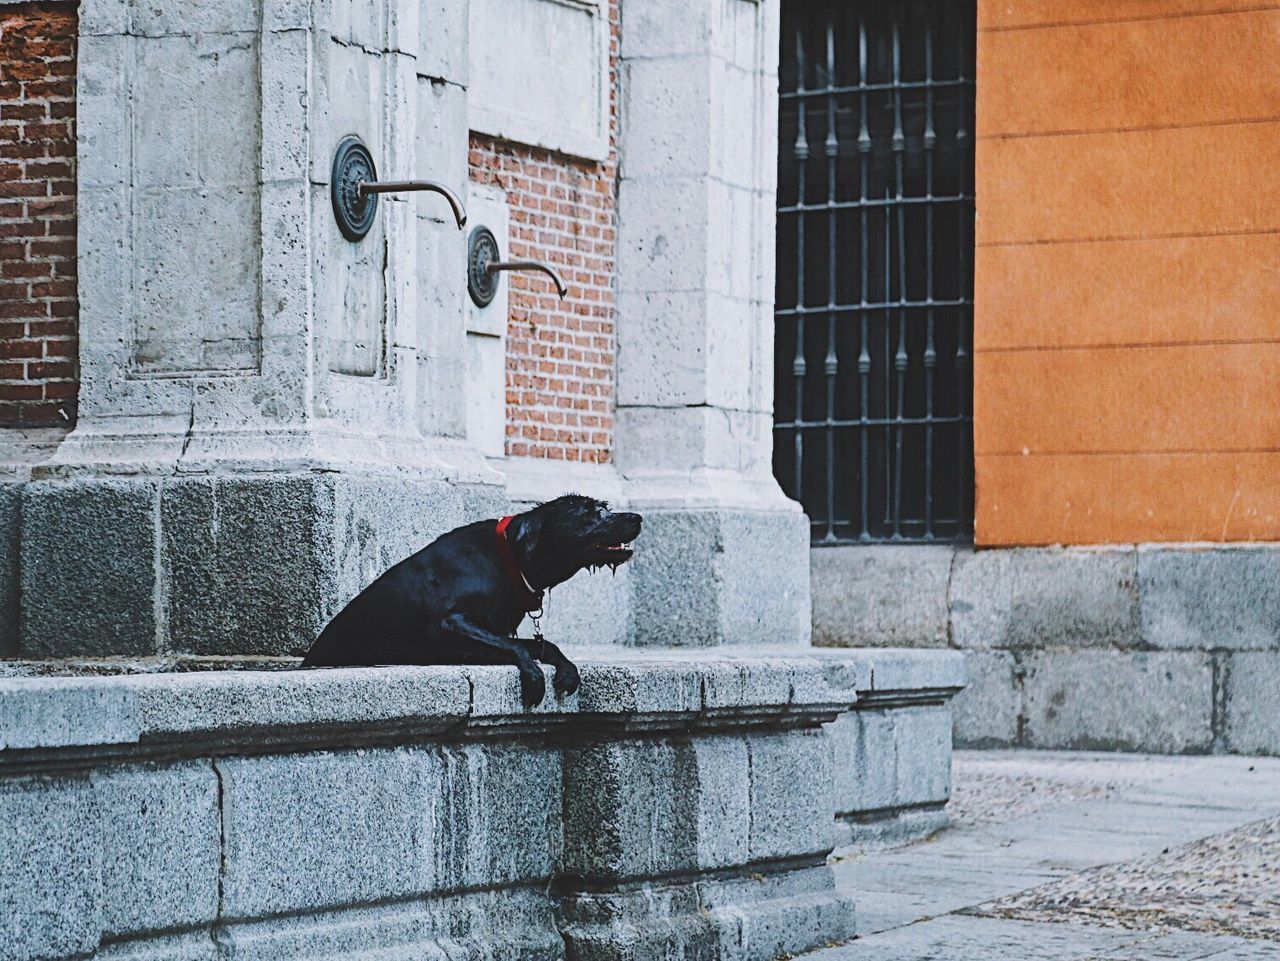 Black dog swimming in fountain